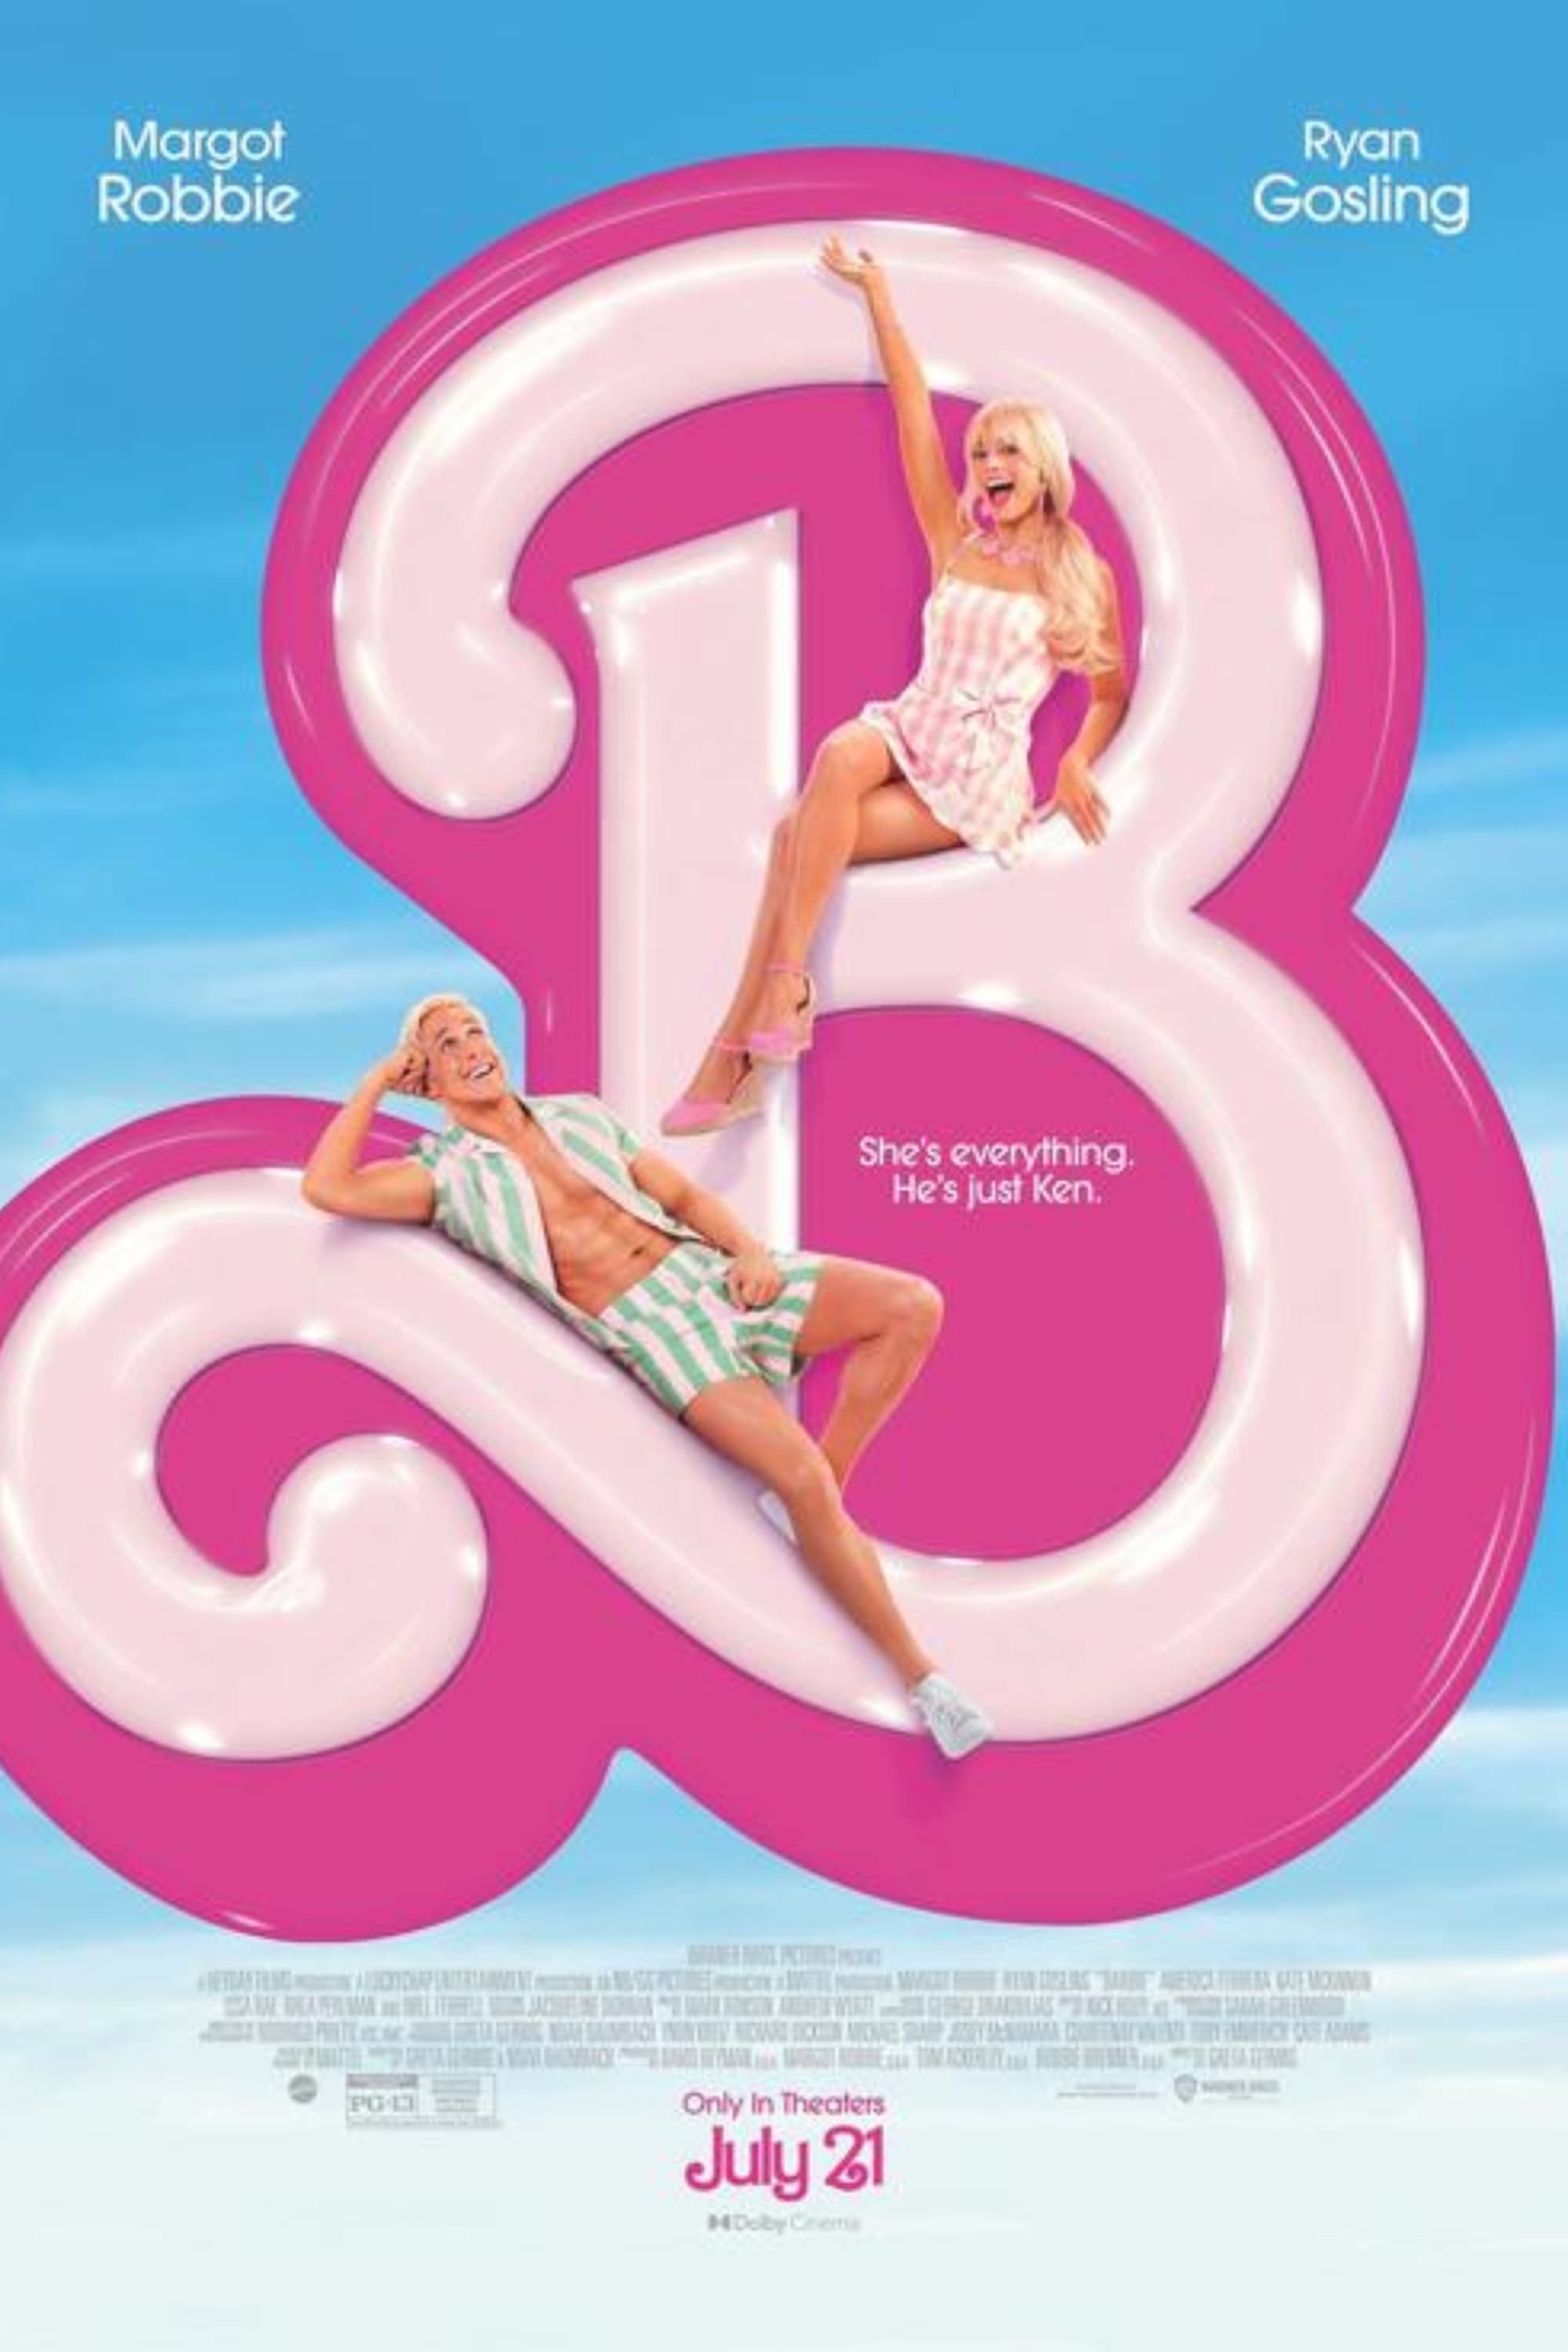 WATCH !! Barbie (2023) FULLMOVIE ONLINE FREE ENGLISH/Dub/SUB Comedy STREAMINGS Movie Poster